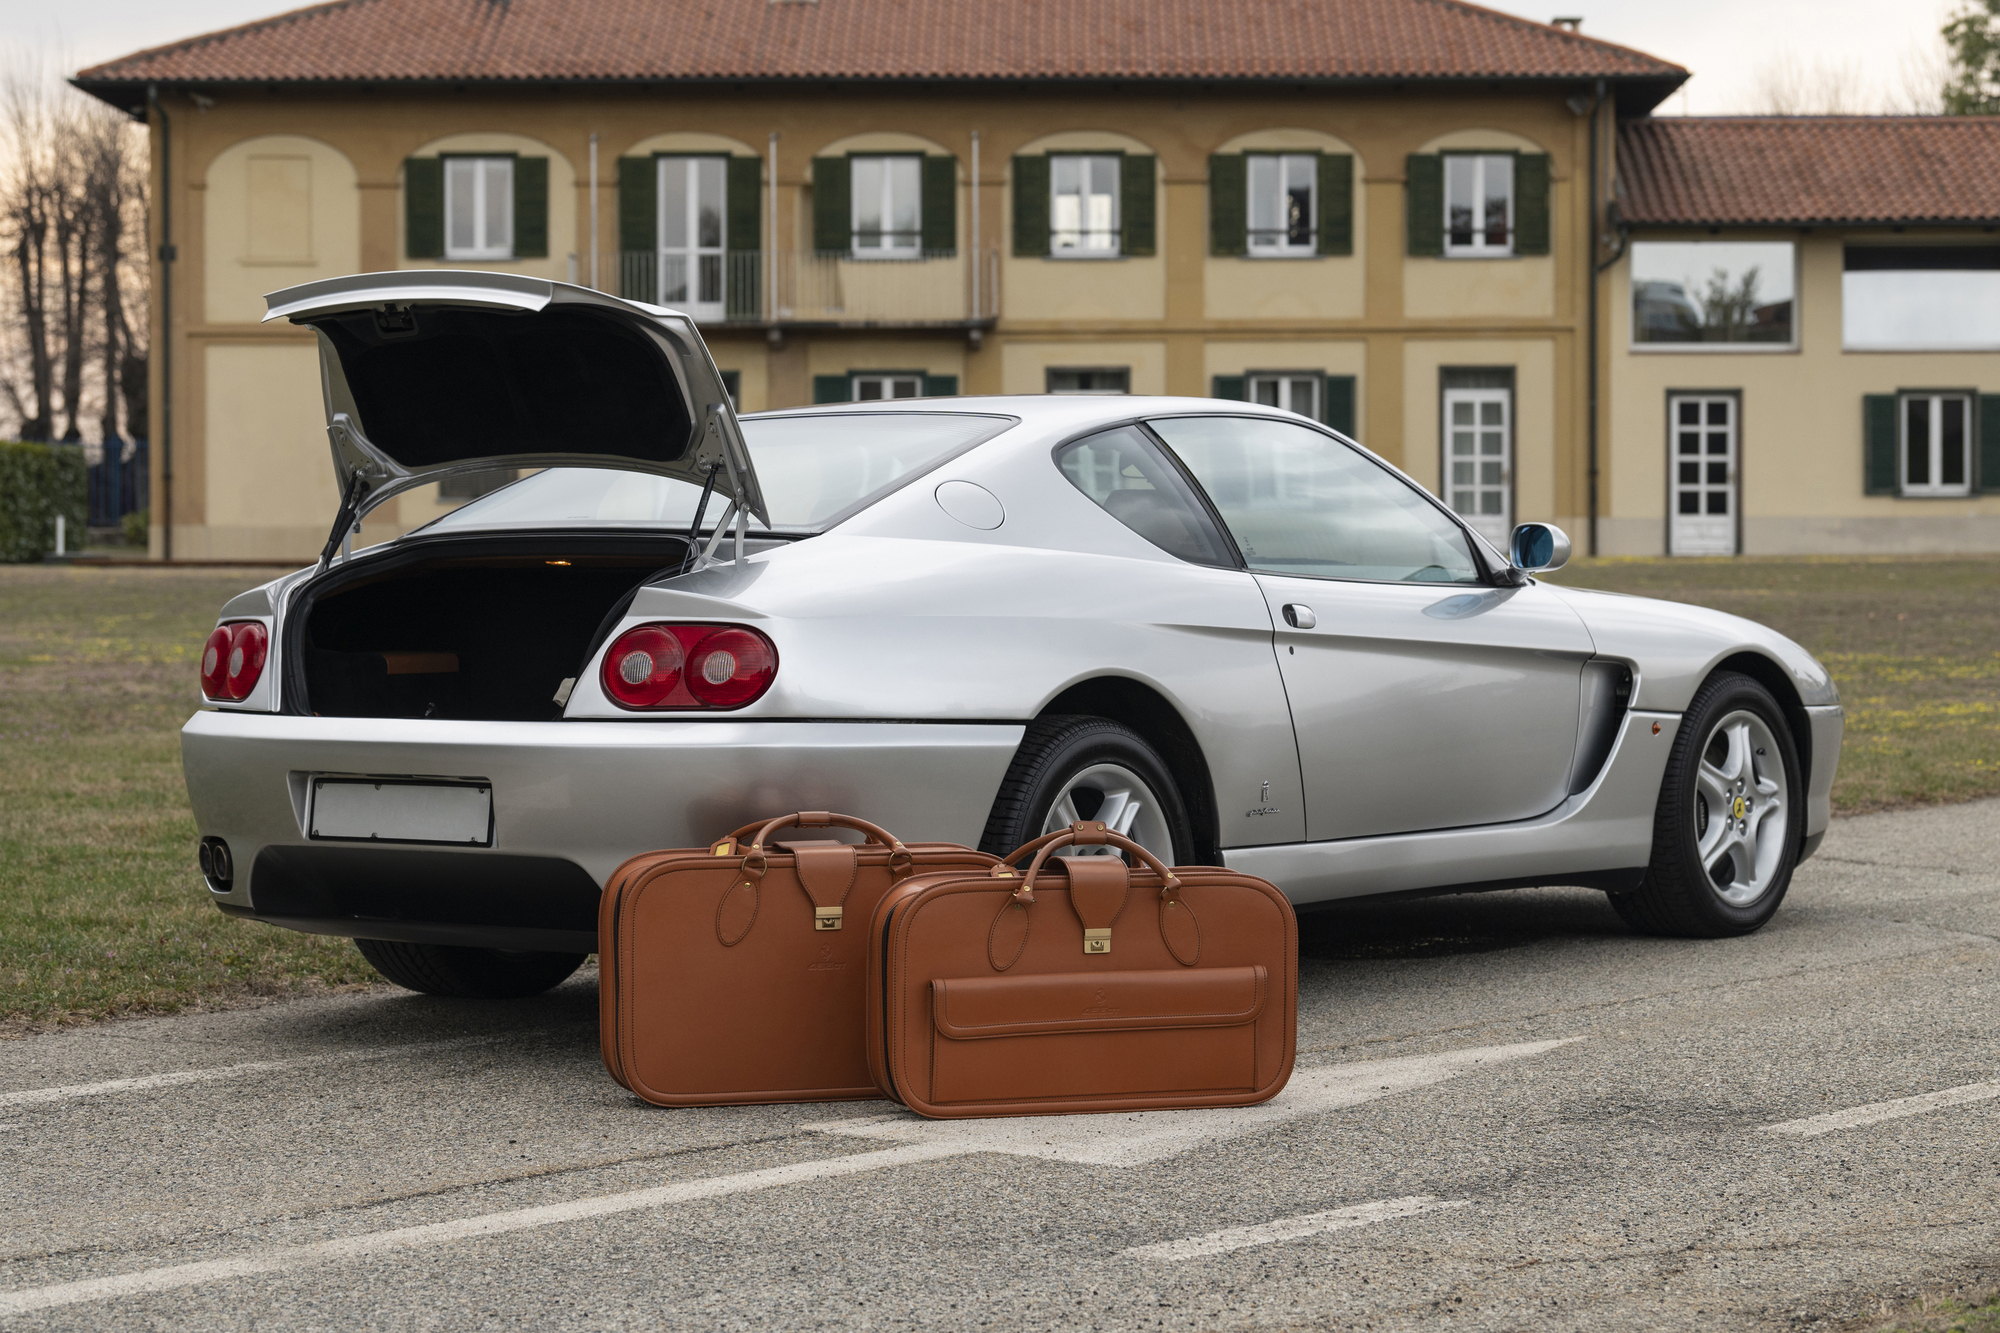 Ferrari 456 GT  隨車的行李箱與皮件，是長途探險的實用工具，質感也相當出眾。